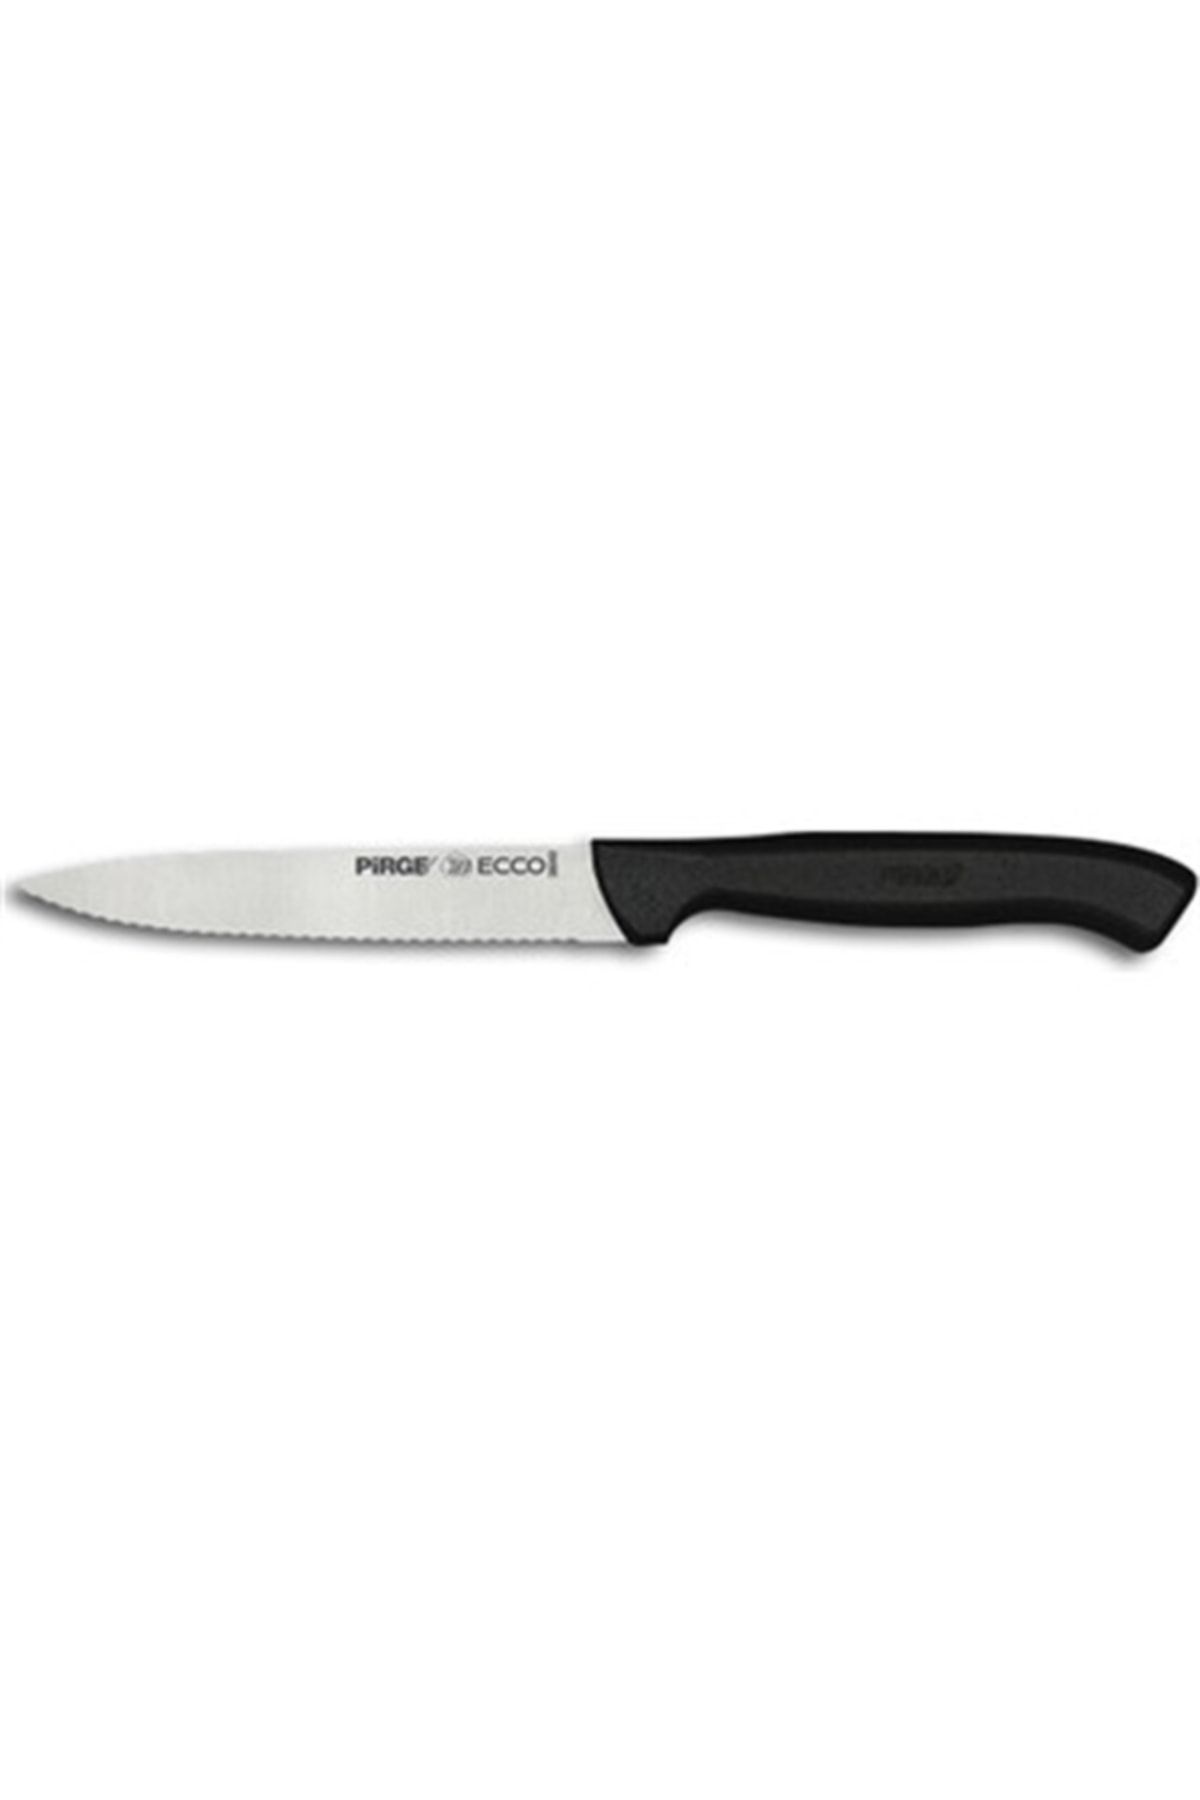 Pirge Ecco Sebze Bıçağı 12 Cm